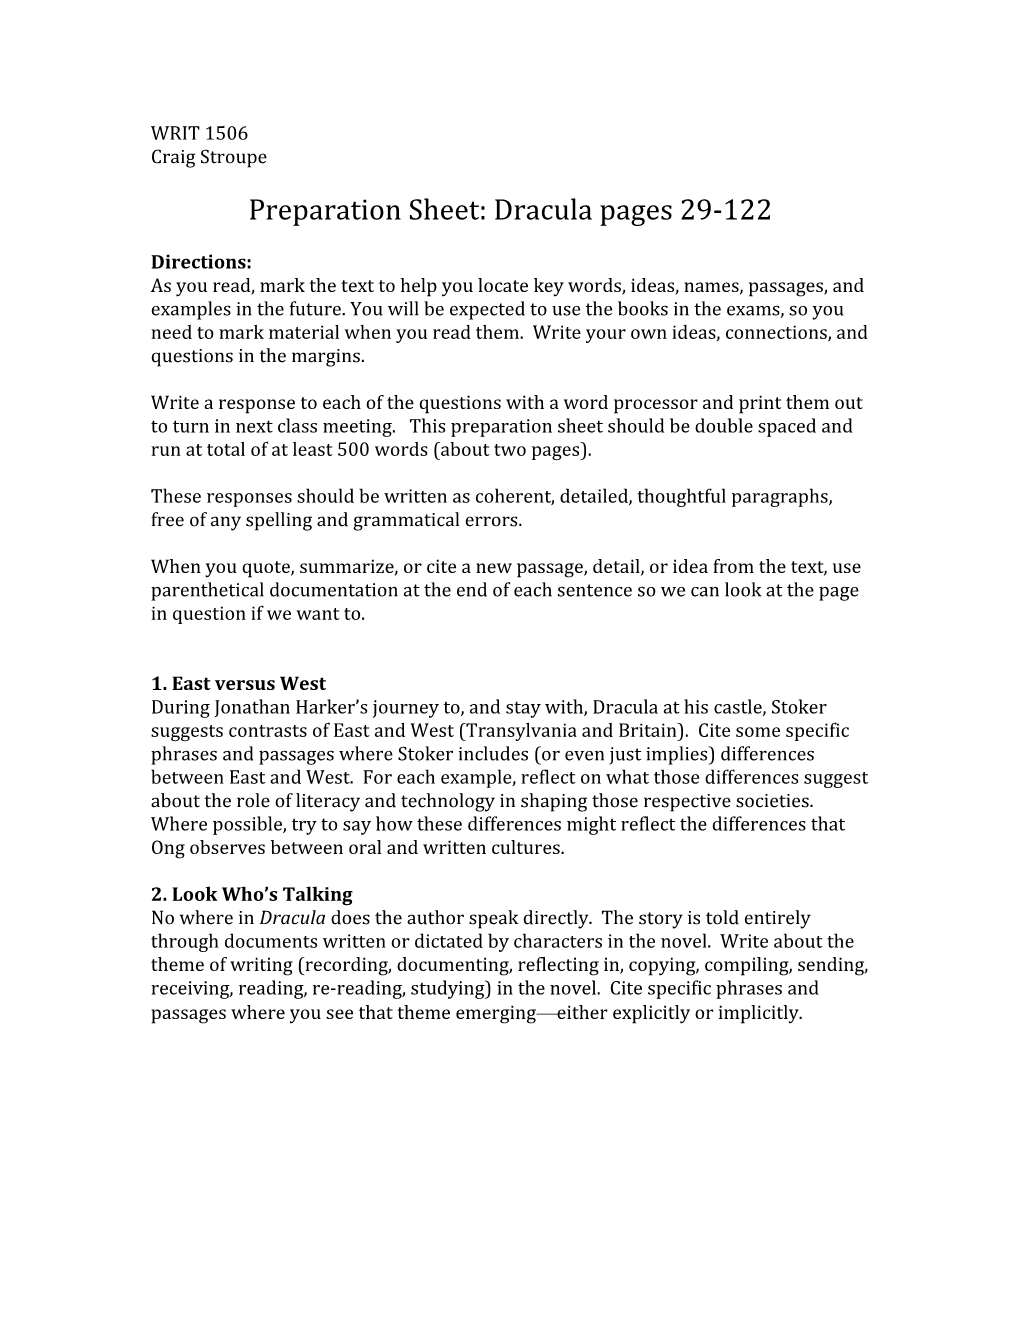 Preparation Sheet: Dracula Pages 29-122